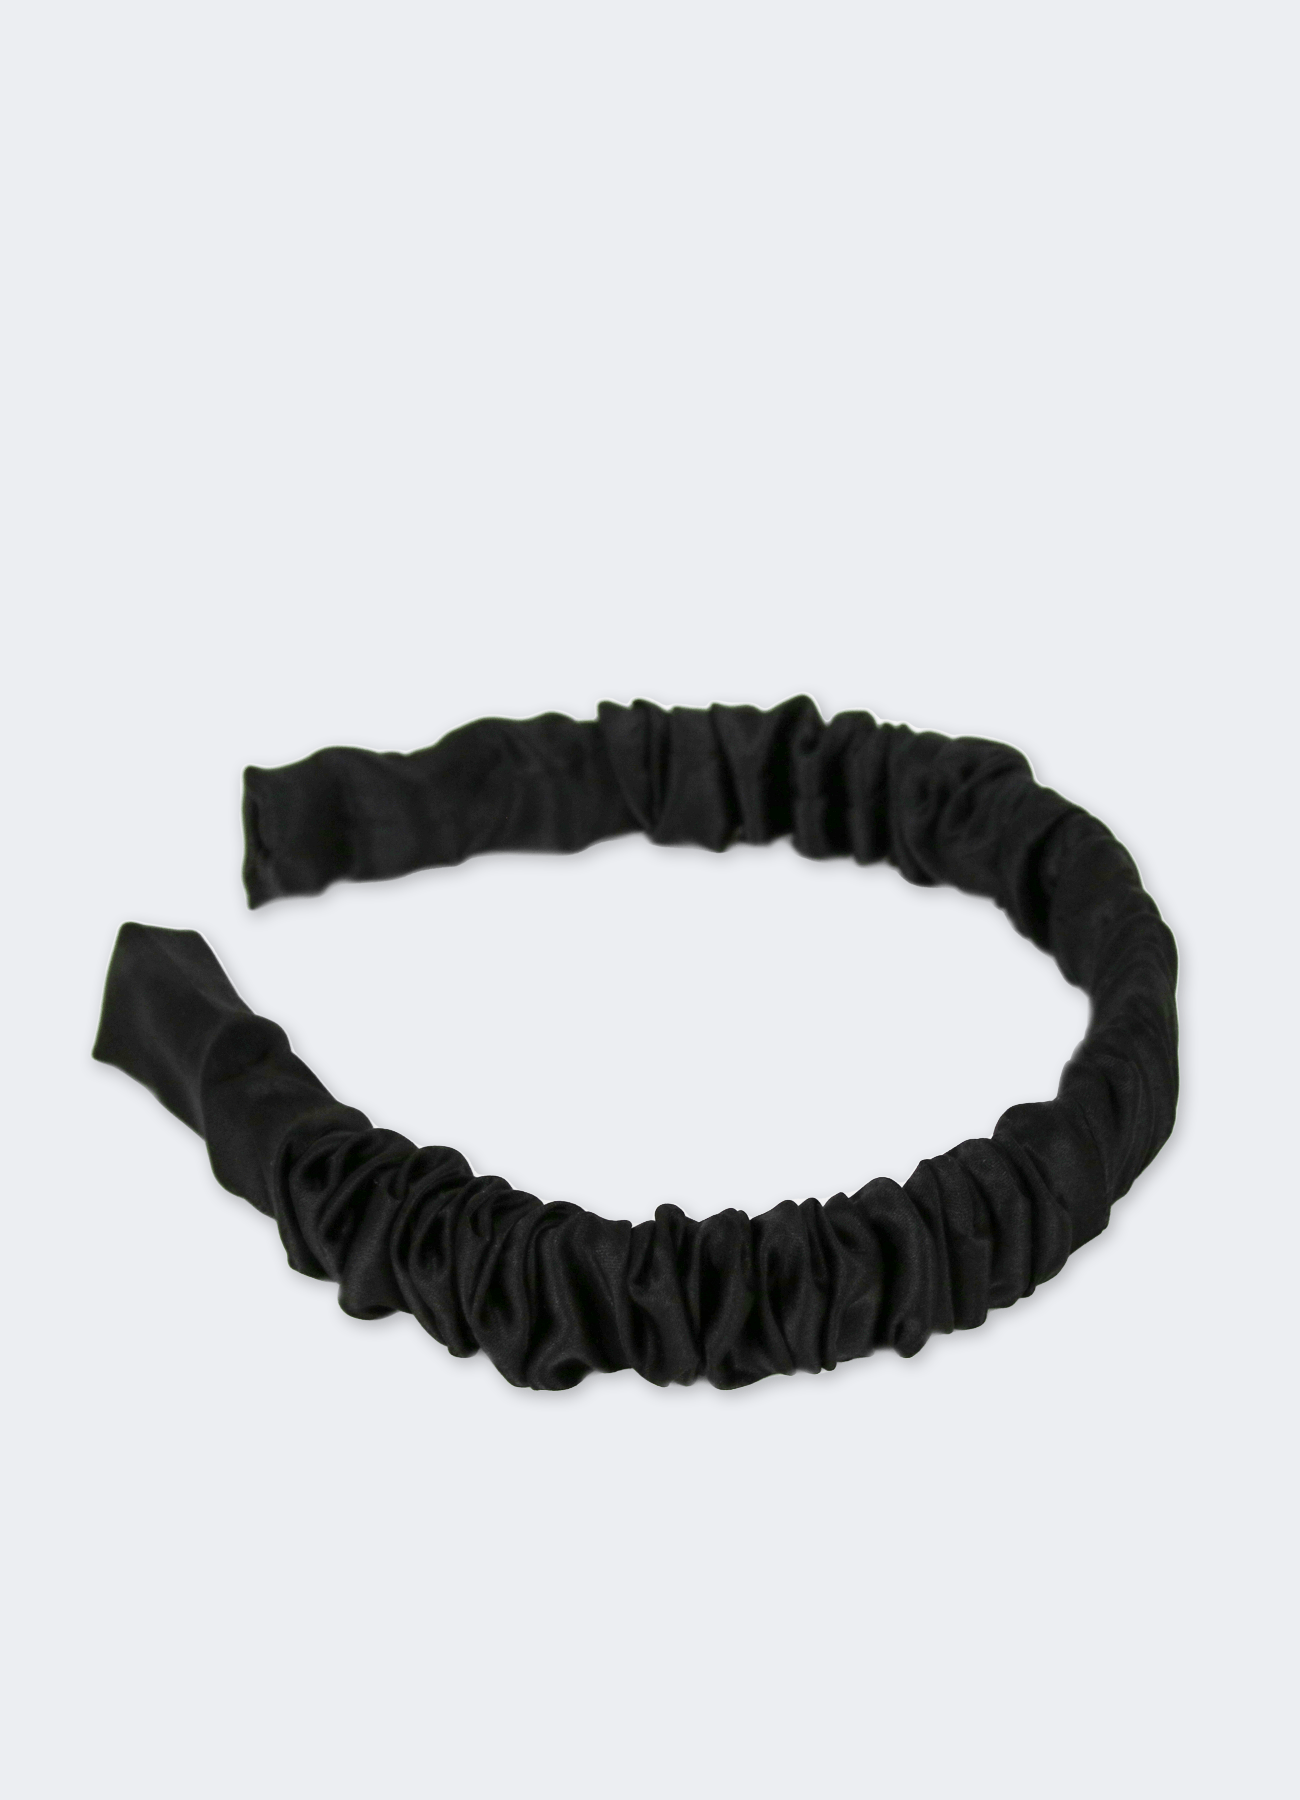 100% Silk Ruched Headband.